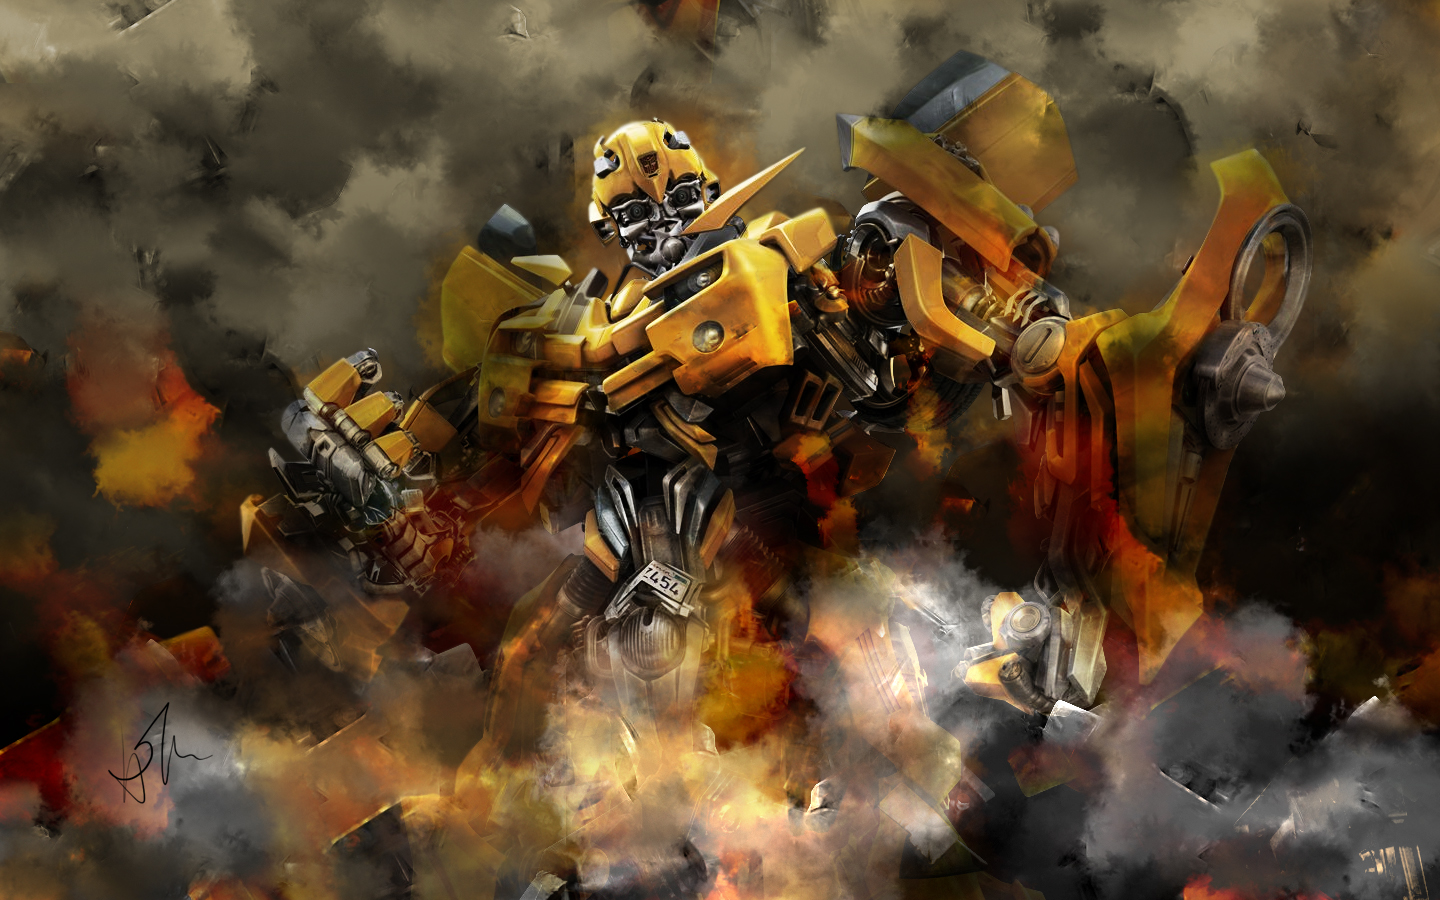 Transformers 2 Bumblebee Wallpaper